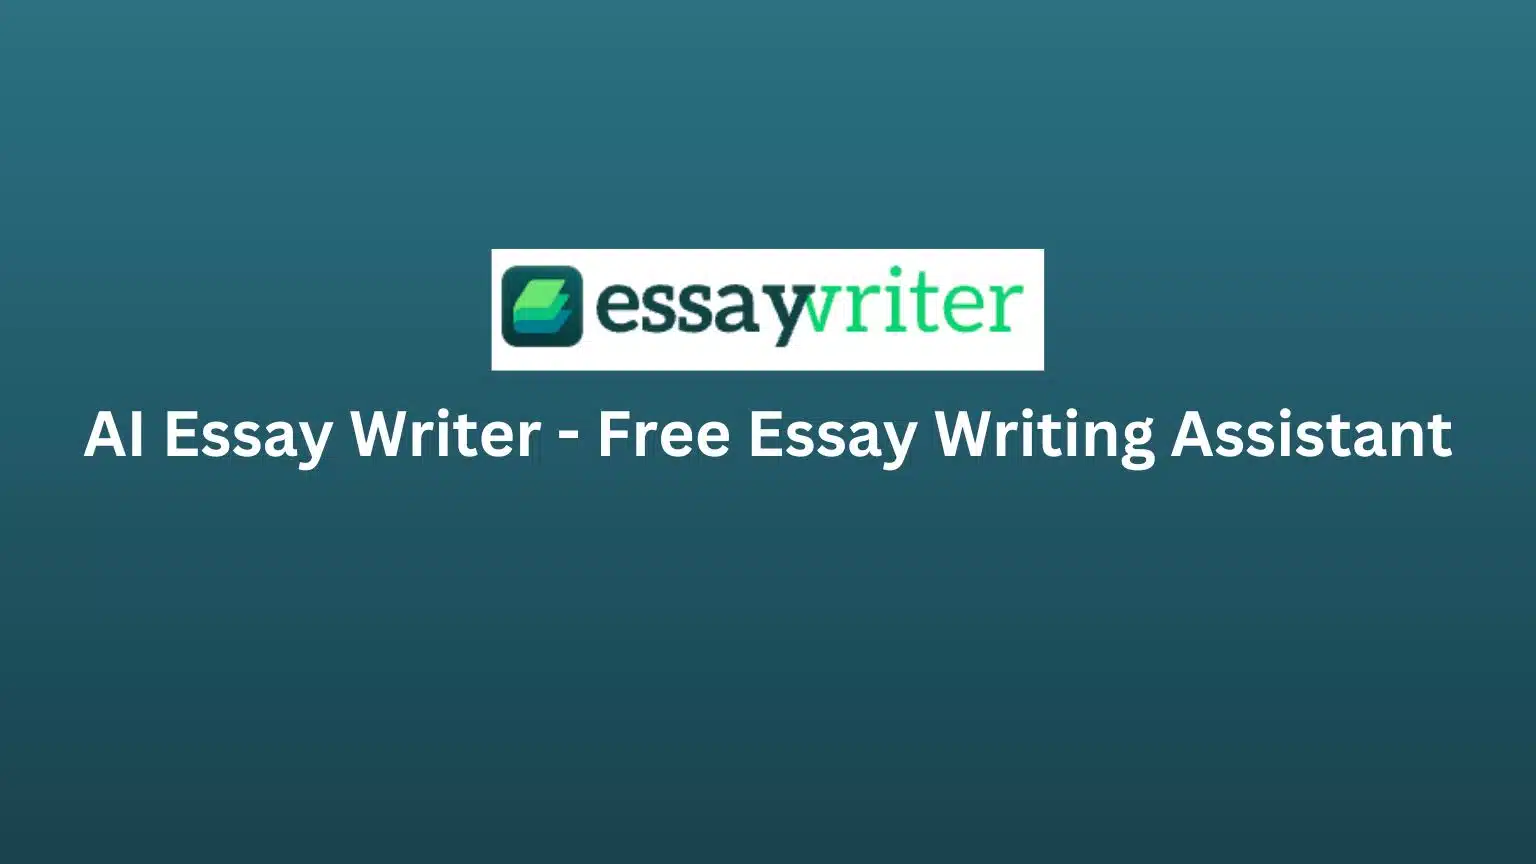 essaywriter review